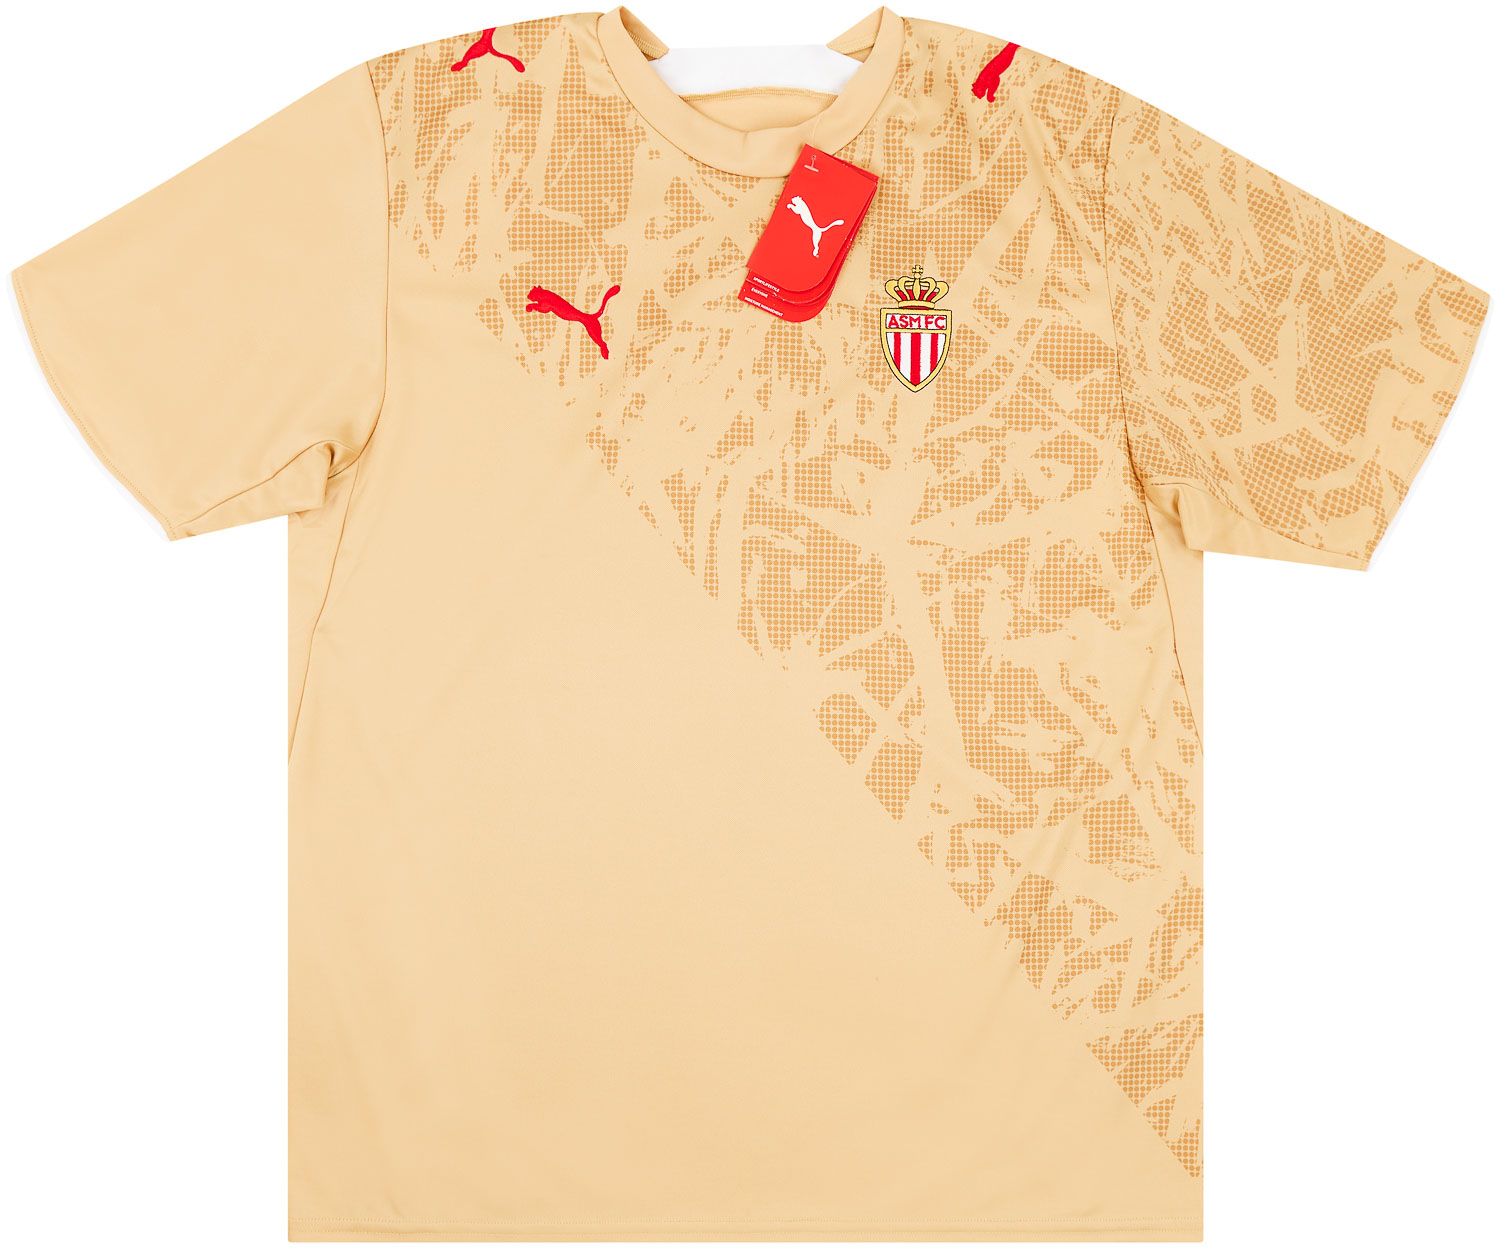 Monaco  Fora camisa (Original)